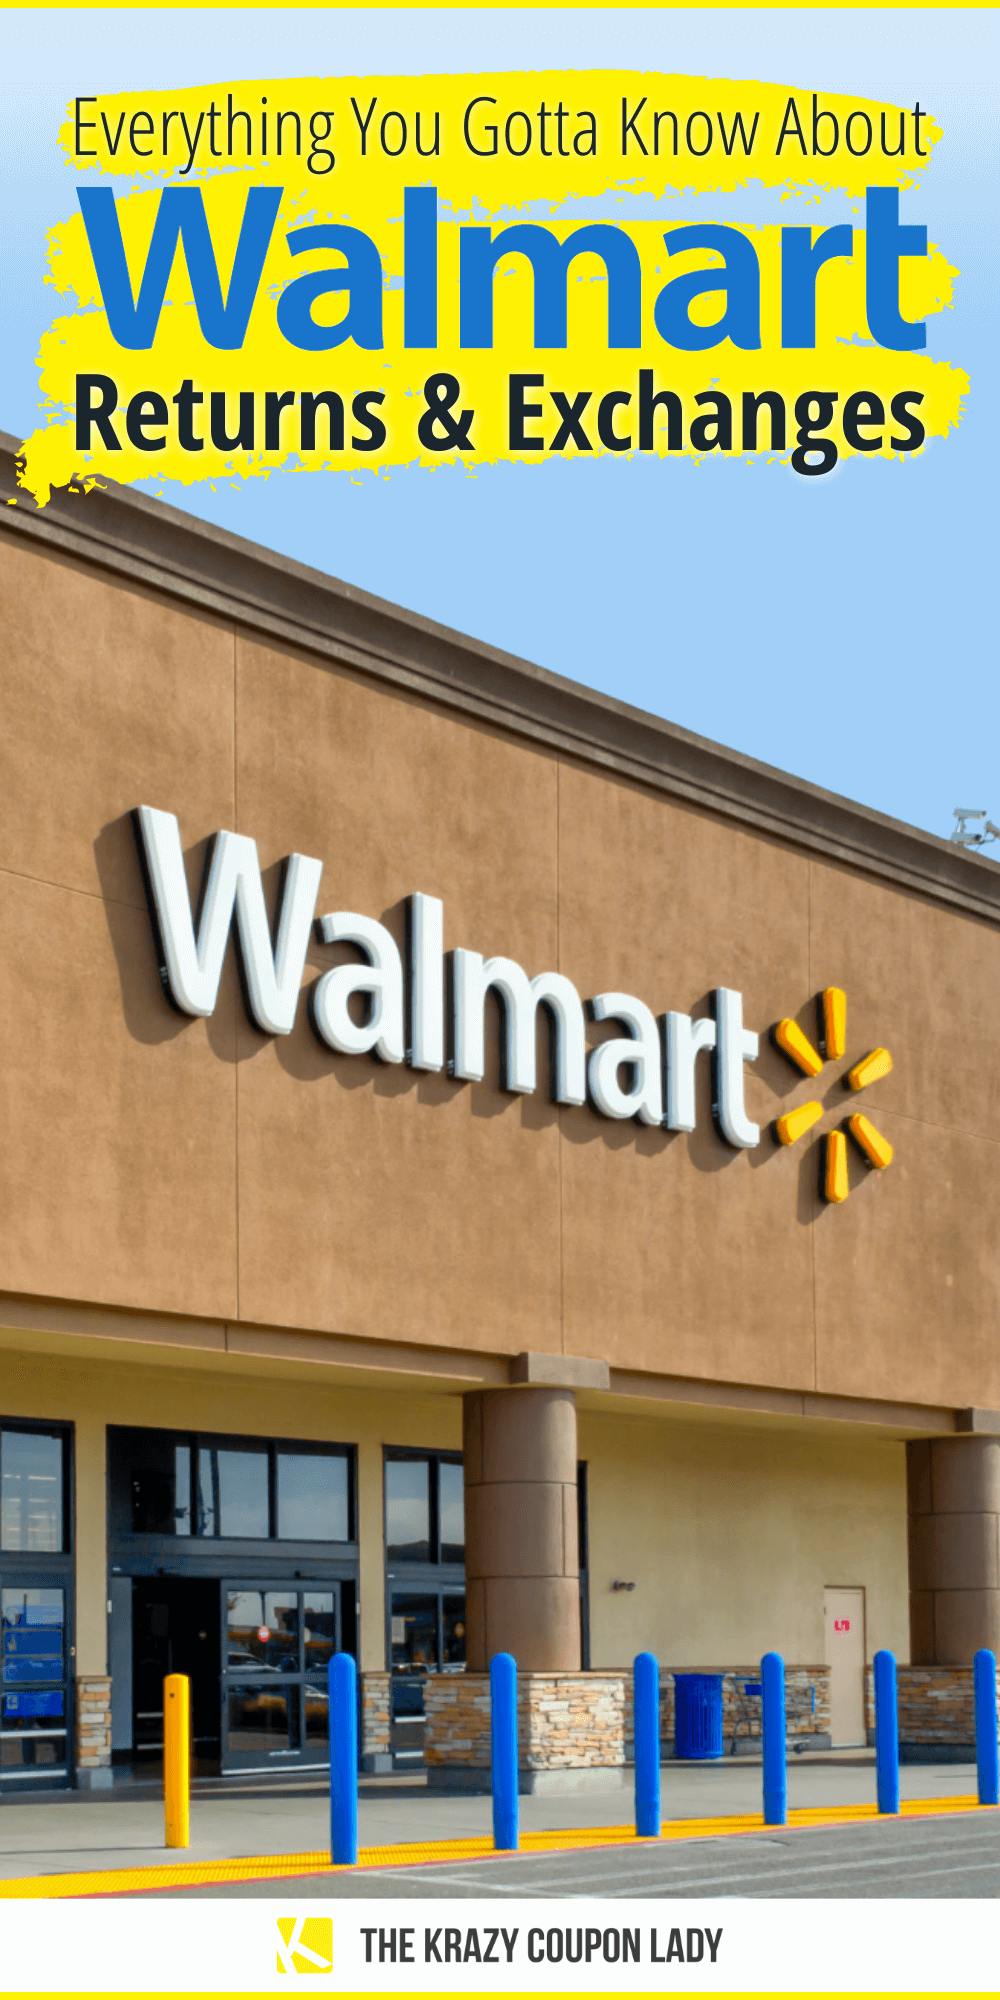 Walmart Returns: 20 Things Their Policy Didn't Make Clear